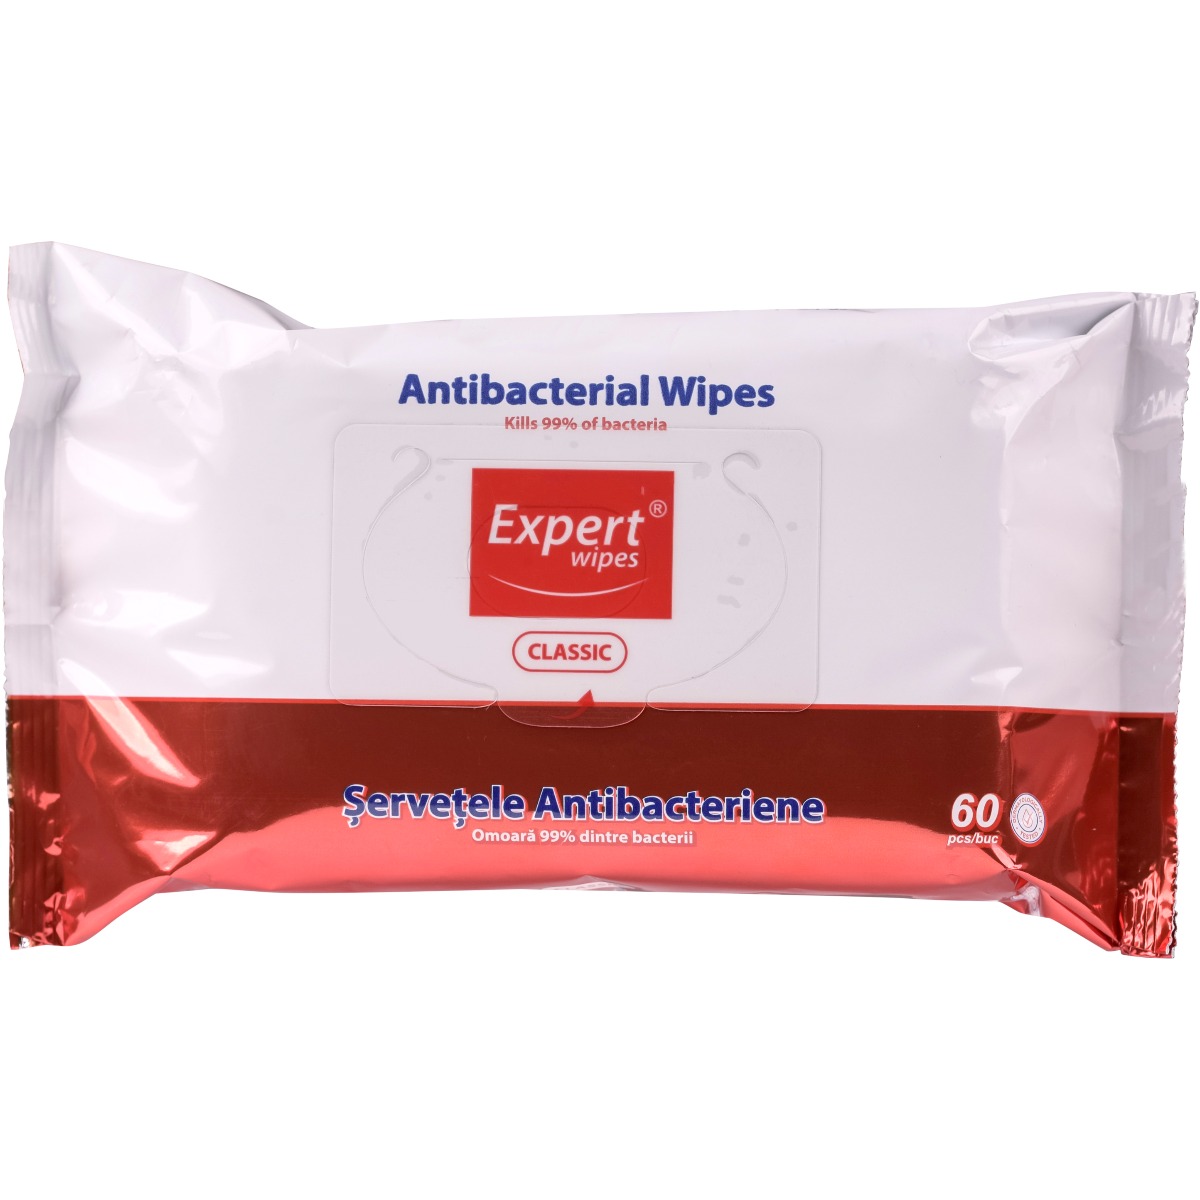 Servetele antibacteriene Expert Wipes Clasic, 60 buc imagine